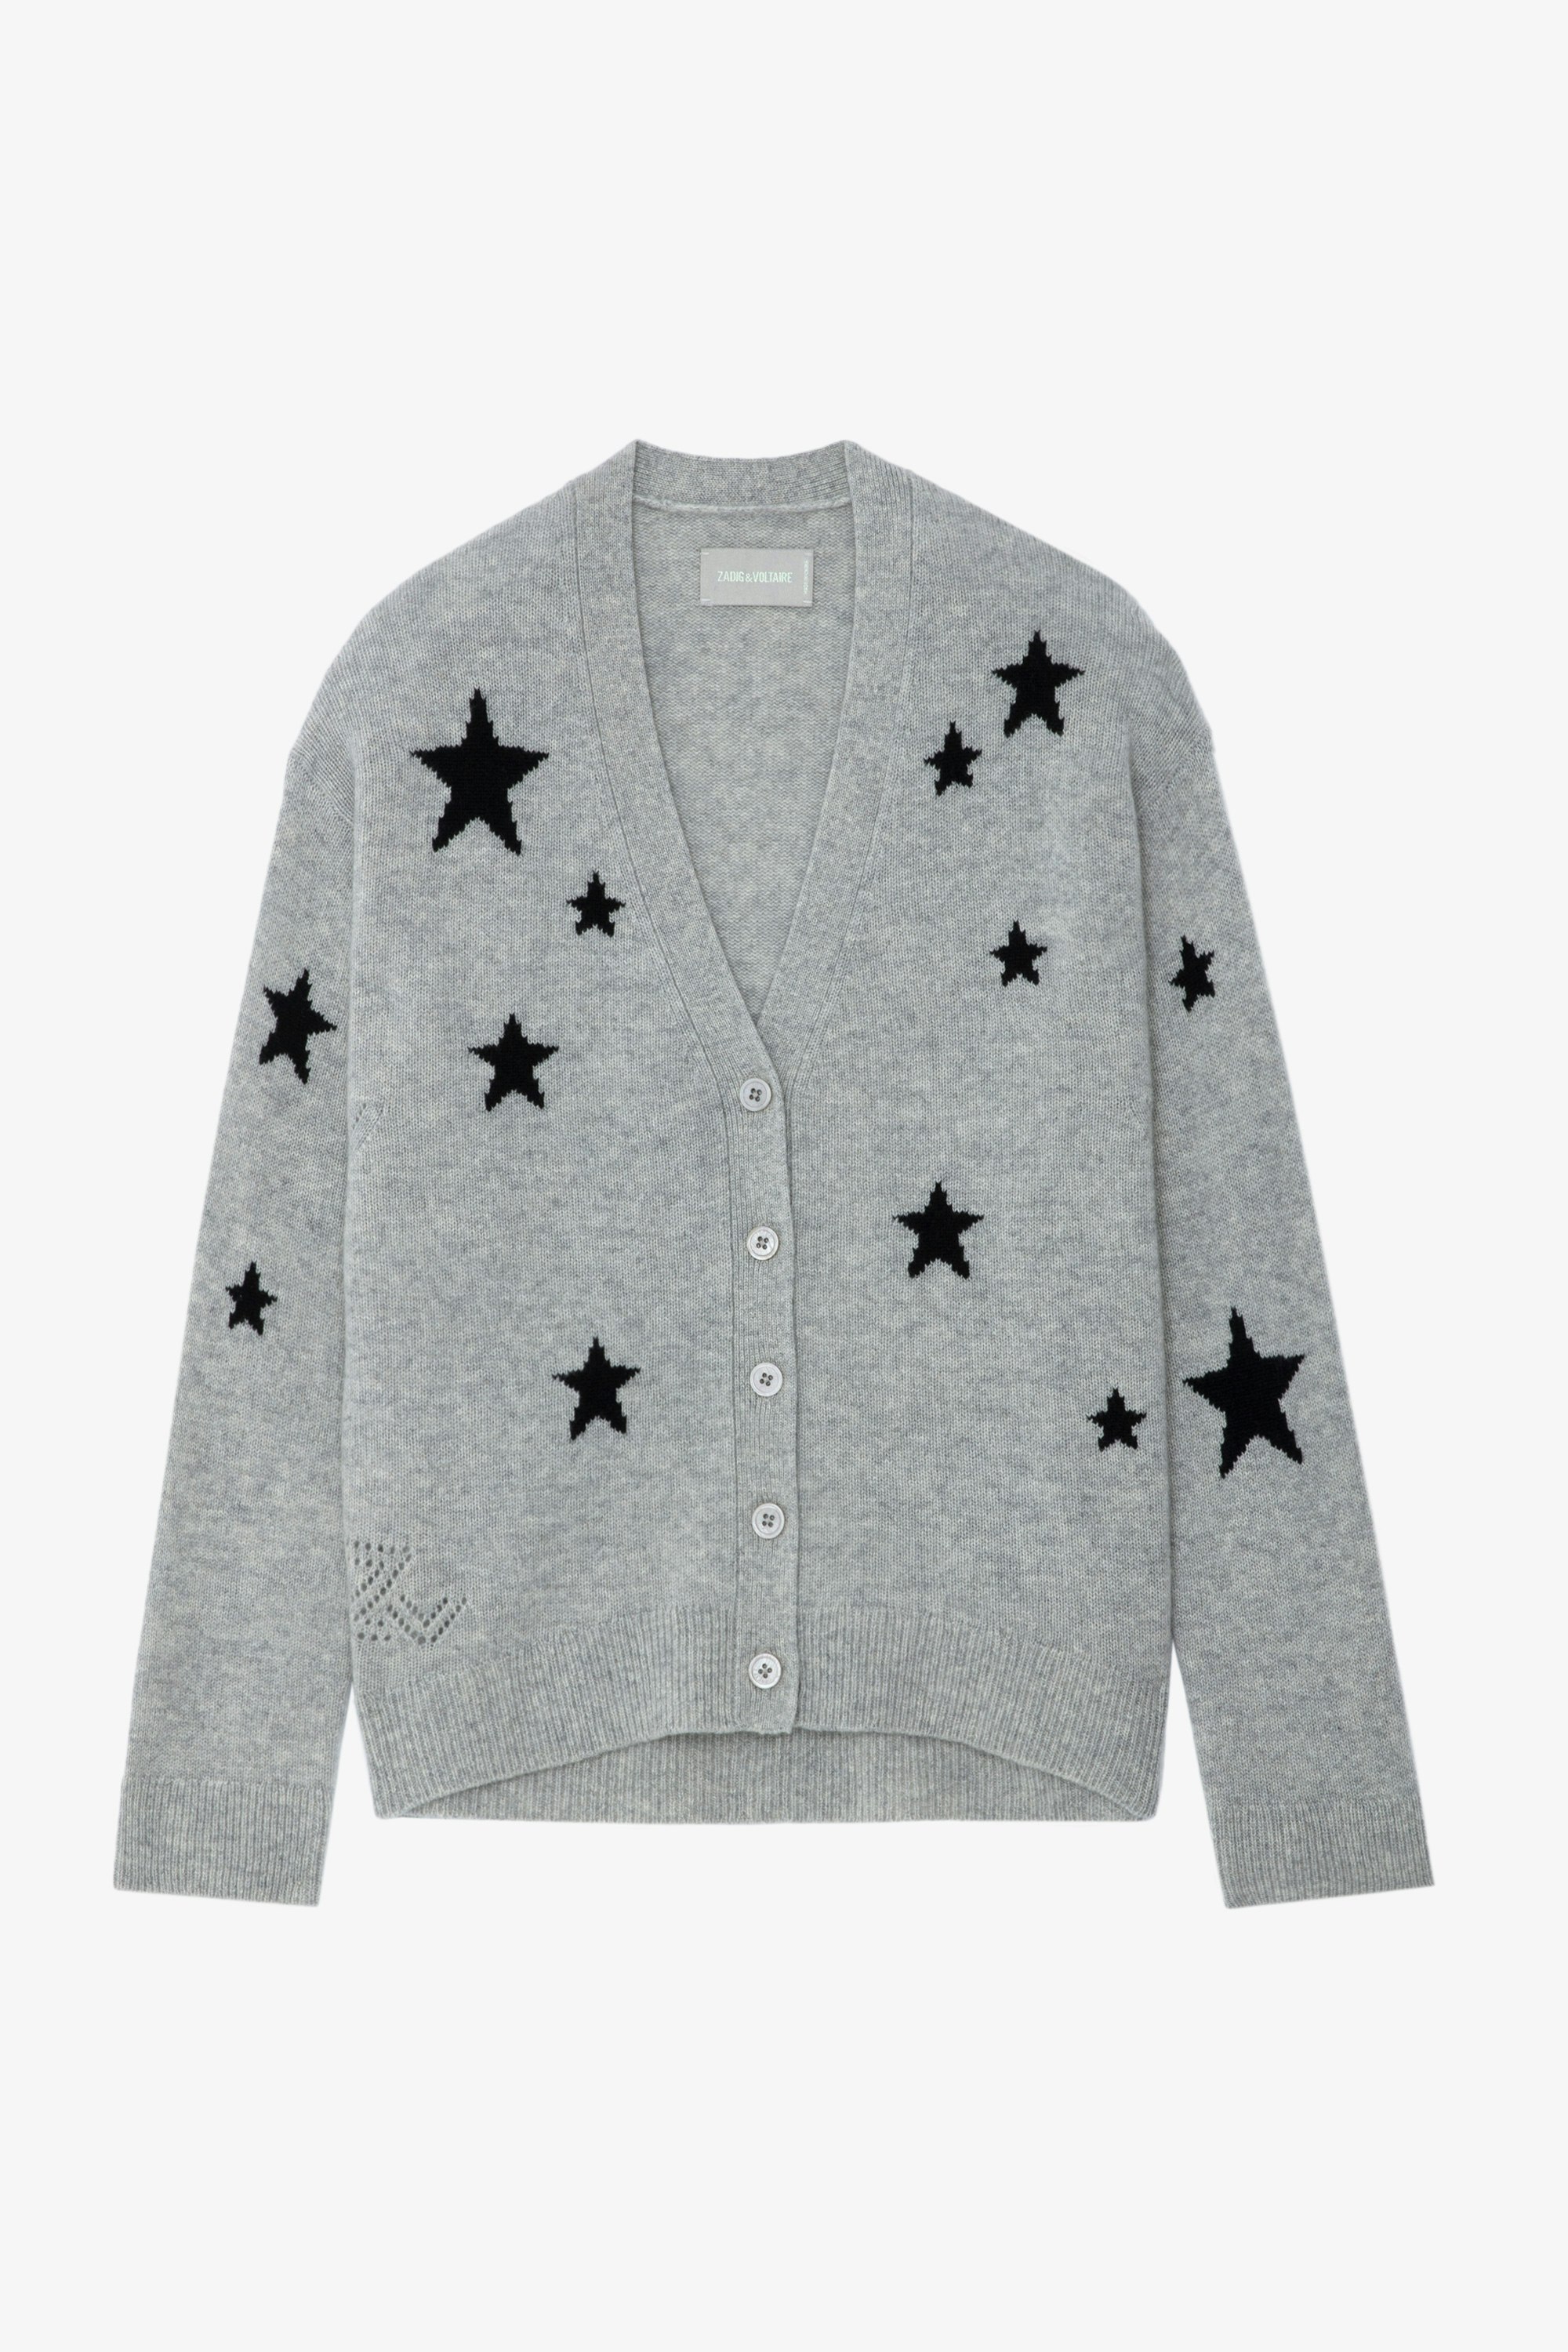 Mirka Stars Cashmere Cardigan - Women’s gray cashmere cardigan with contrasting stars.